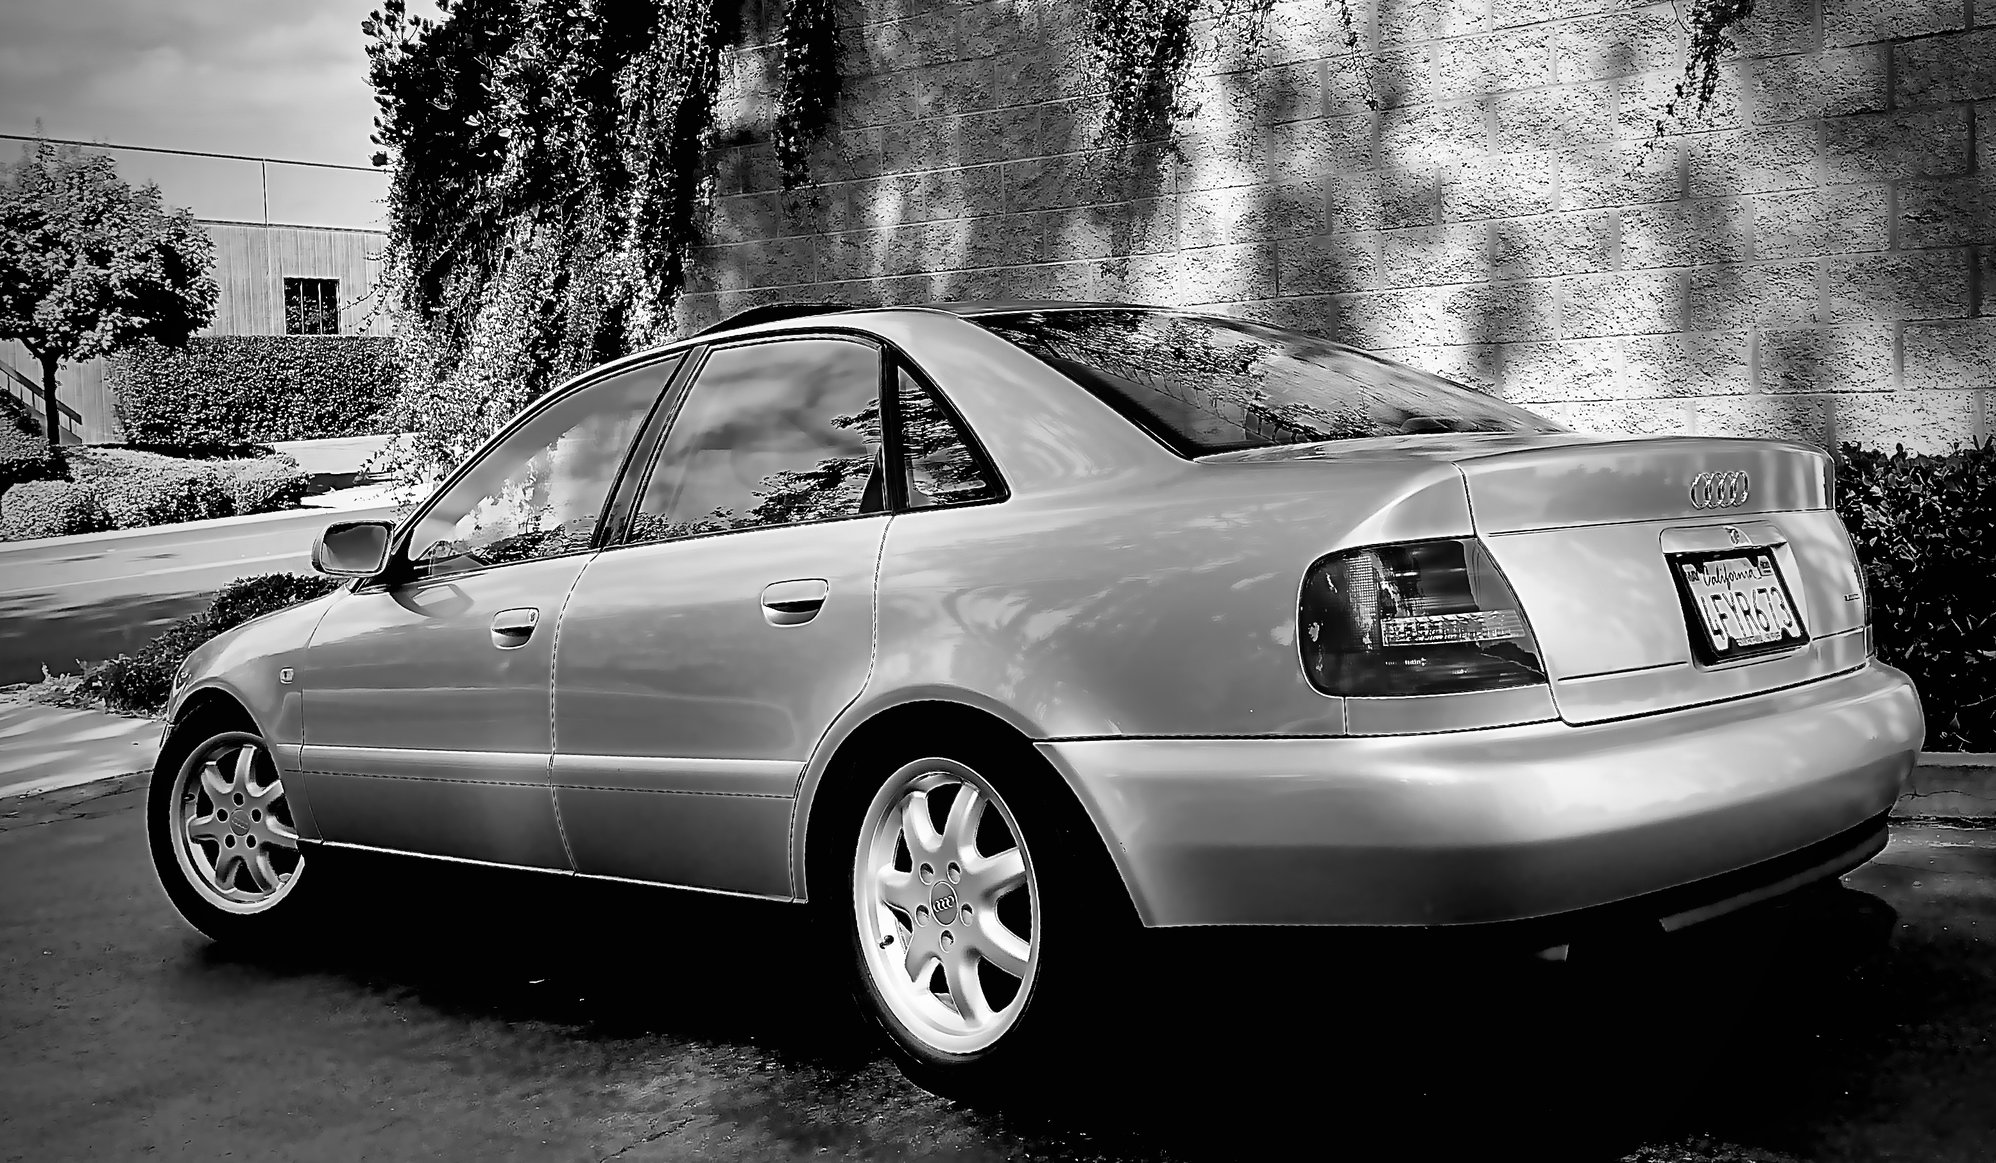 1999 Audi A4 Quattro - 1-Owner B5 A4 1.8T Quattro 99k miles!! - Used - VIN WAUCB28D9XA252800 - 99,000 Miles - 4 cyl - AWD - Manual - Sedan - Silver - Sf Bay Area, CA 94025, United States